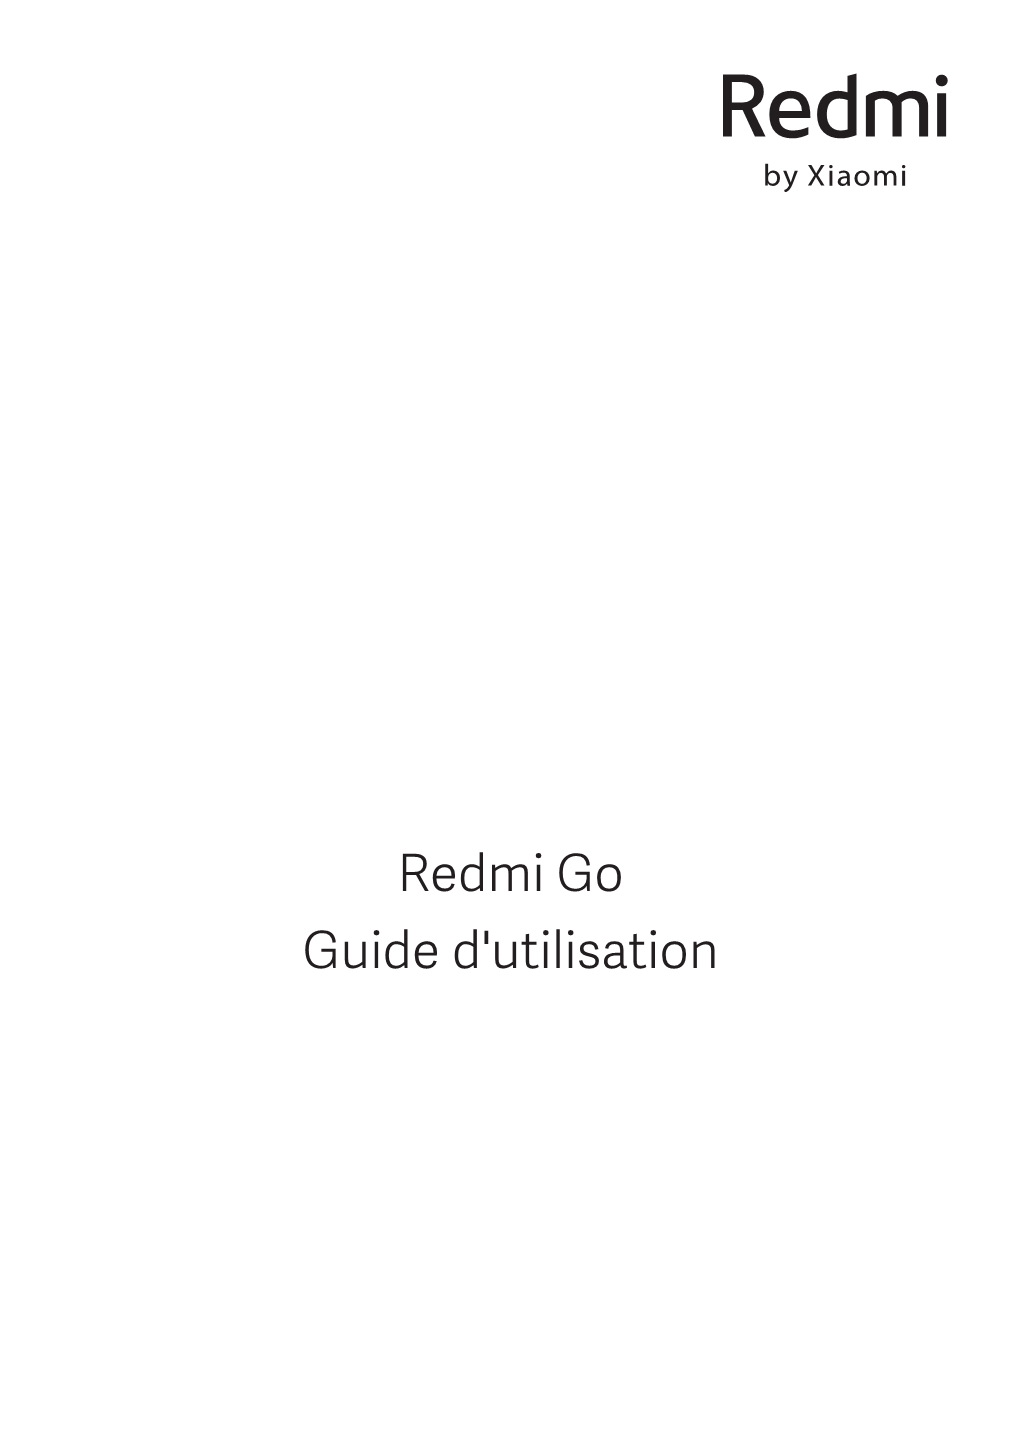 Redmi Go Guide D'utilisation Samedi 16 Août Boutons De Volume